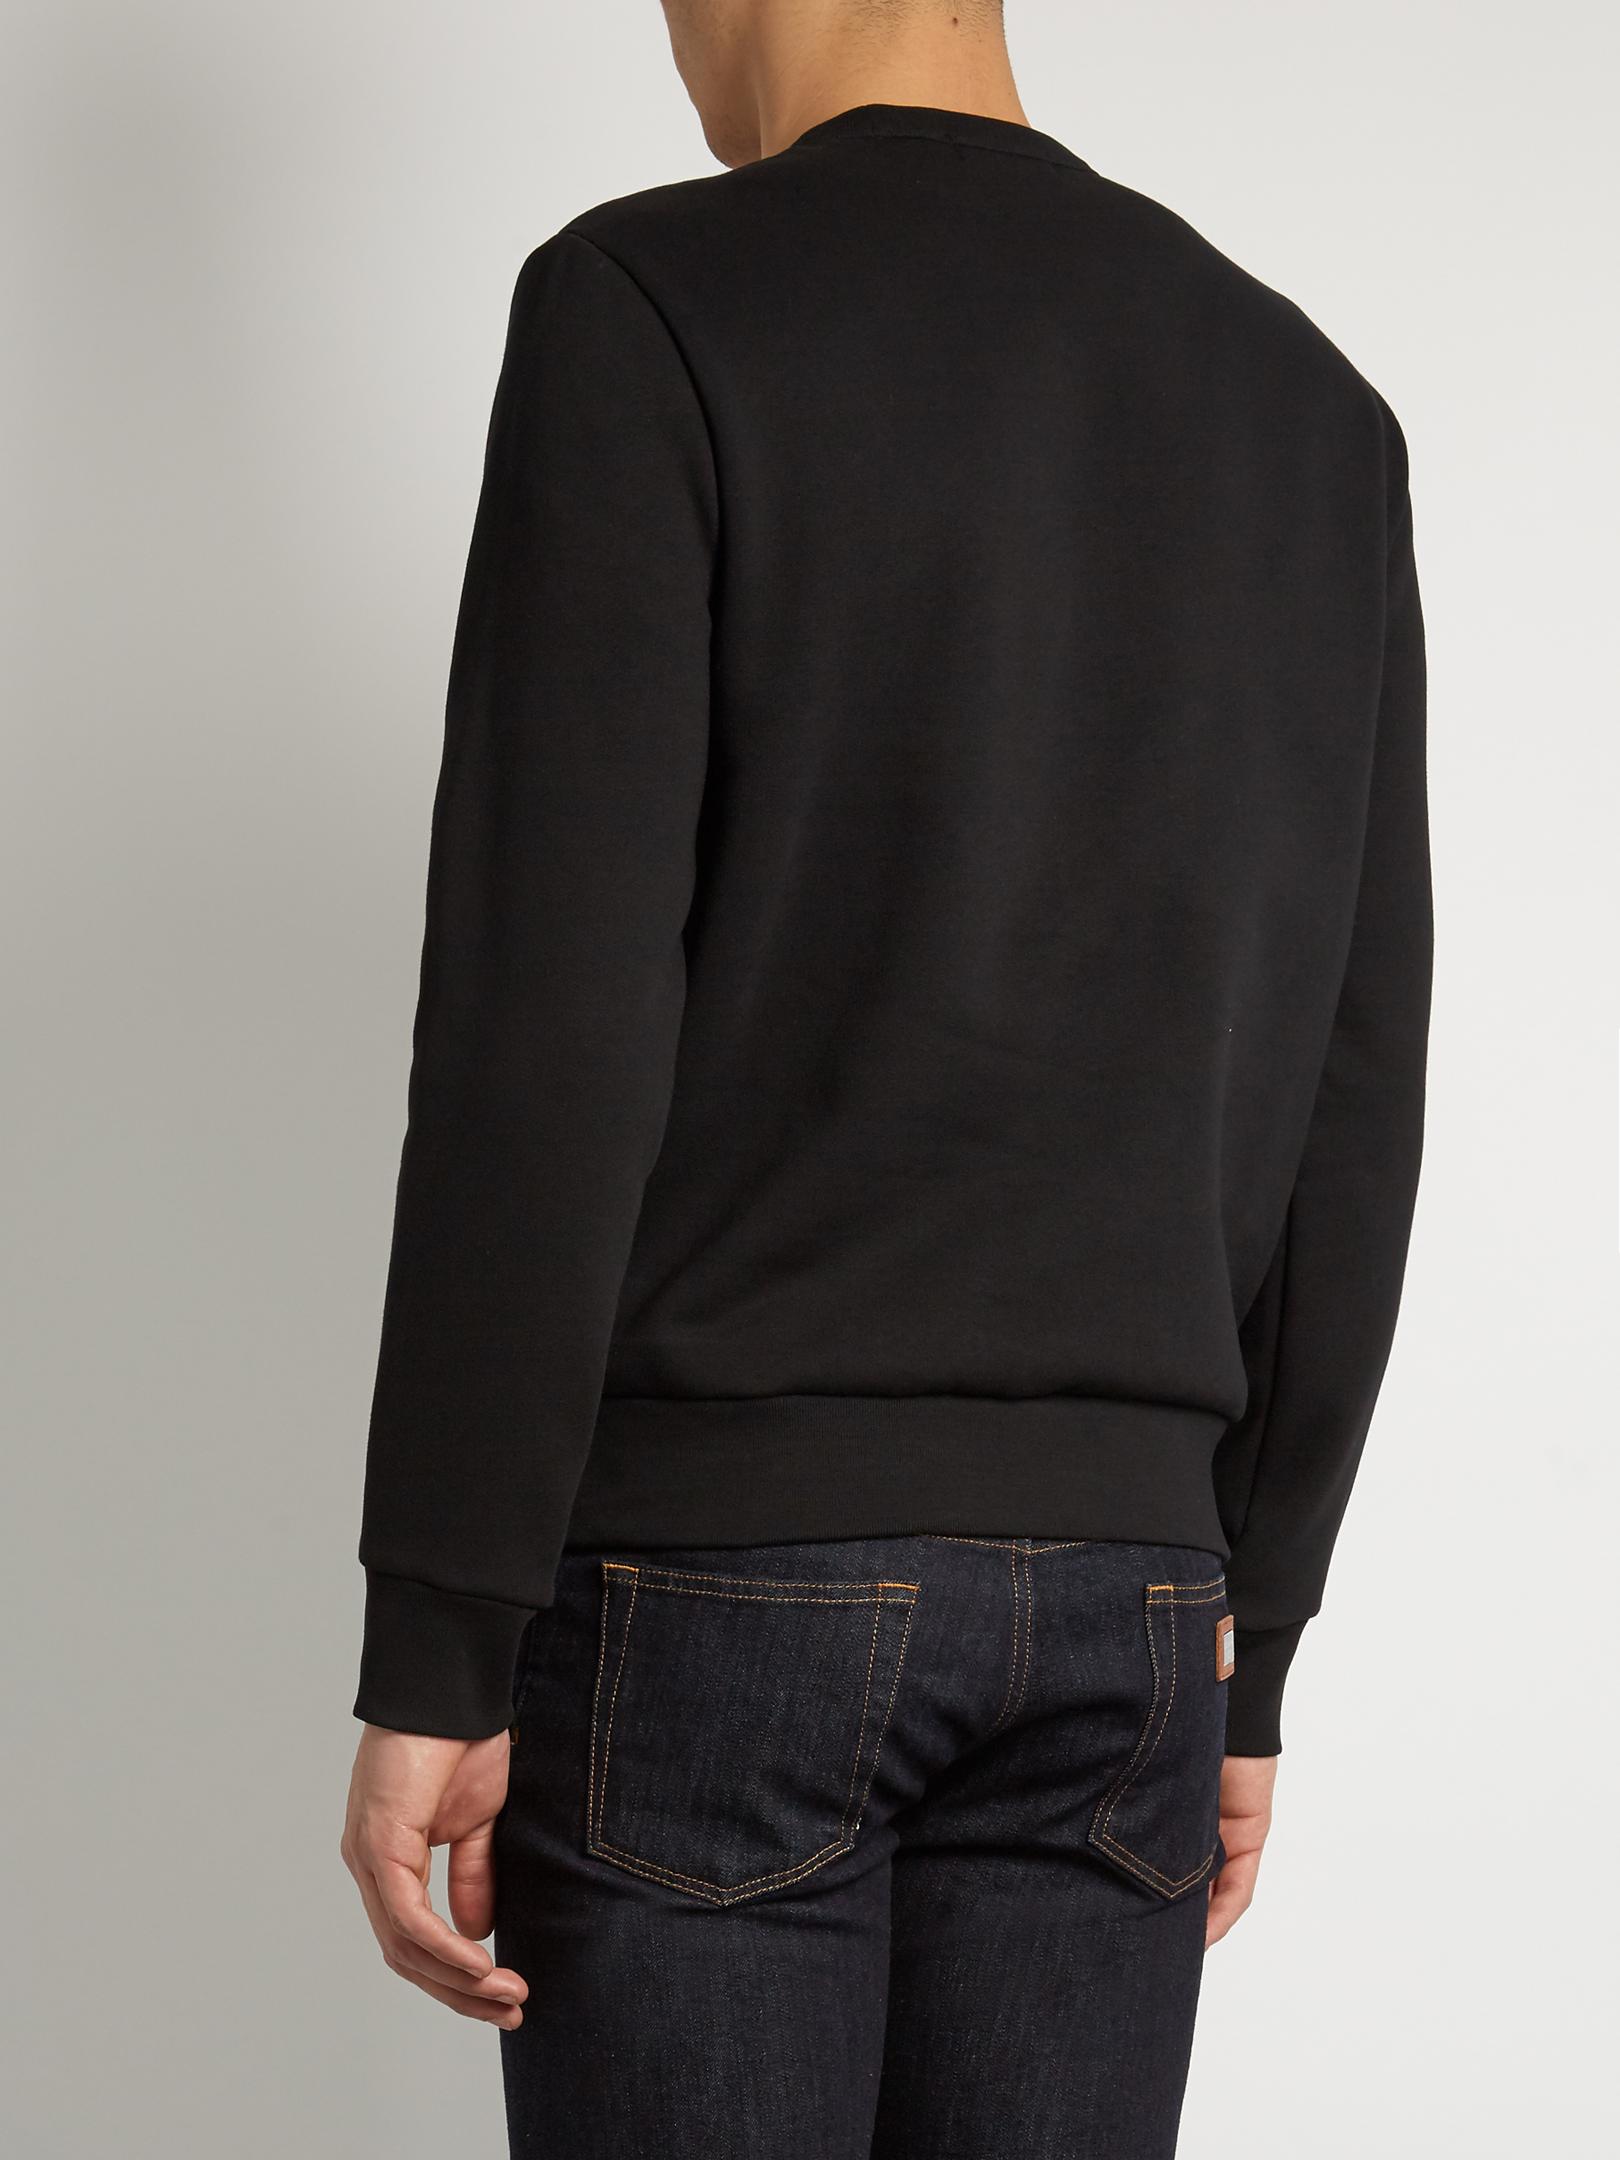 Burberry Equestrian Knight Cotton-blend Sweatshirt in Black for Men - Lyst